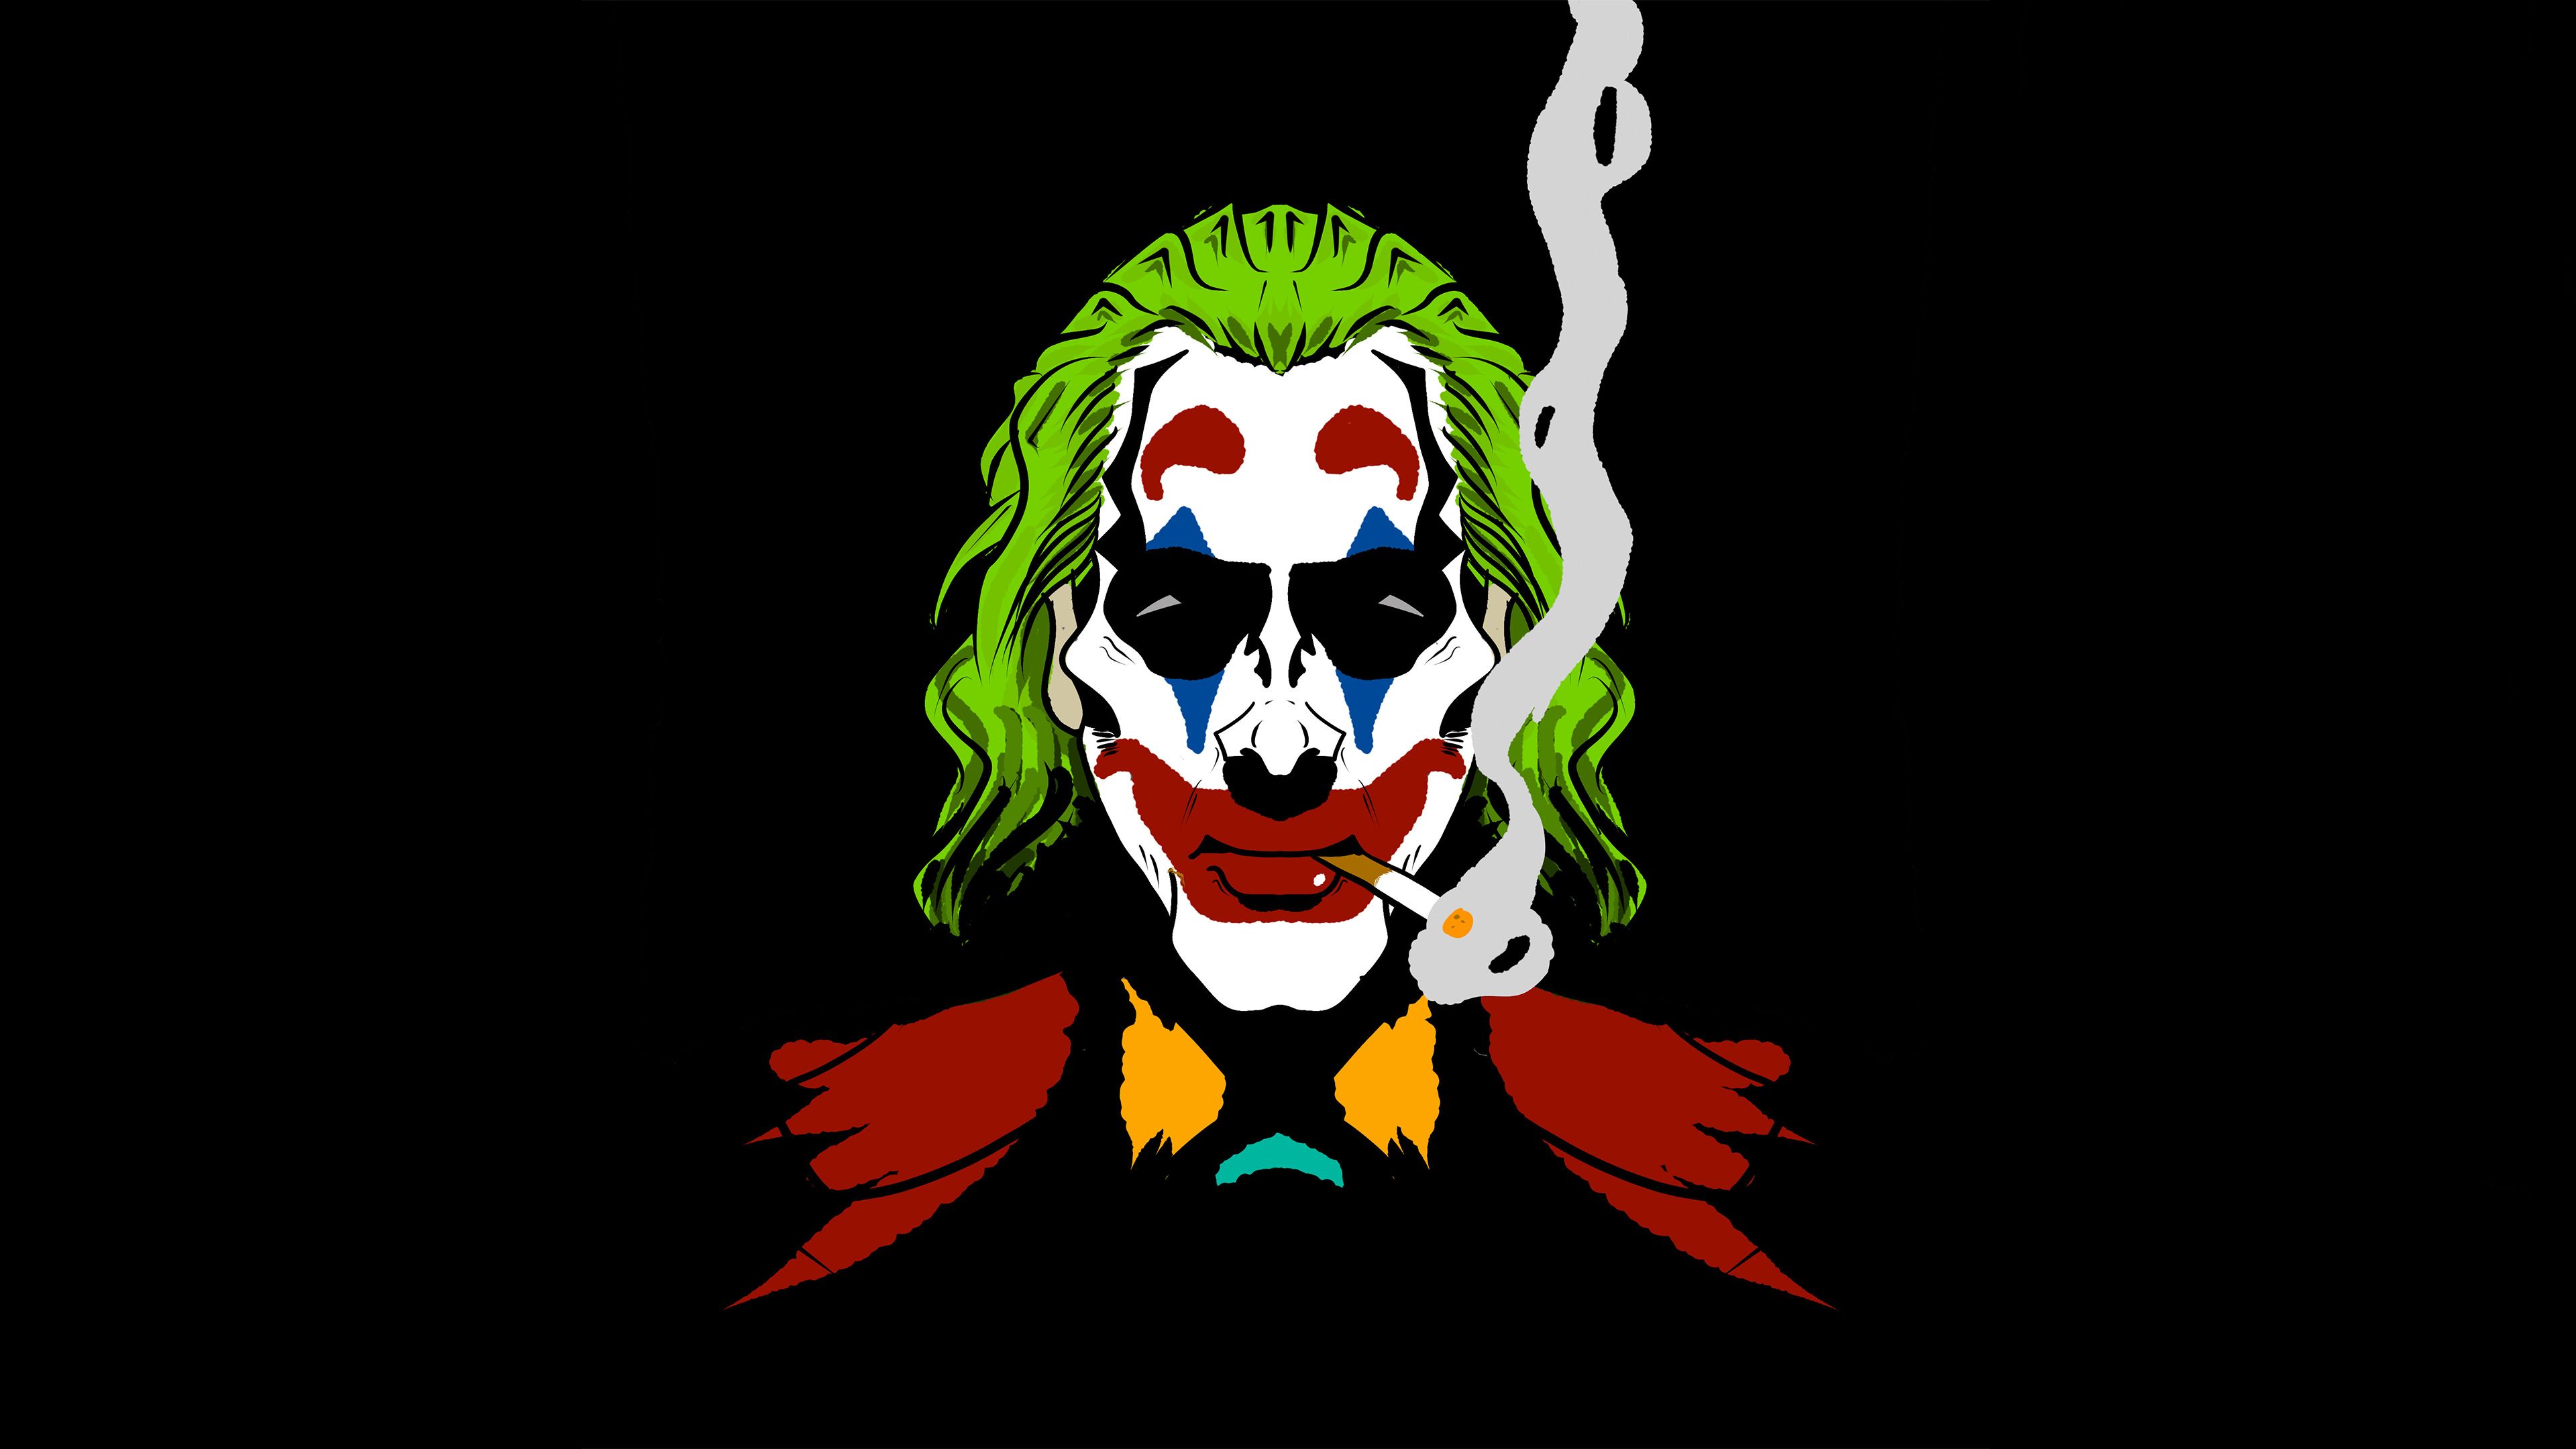 Joker Smoking Wallpaper, HD Minimalist 4K Wallpaper, Image, Photo and Background